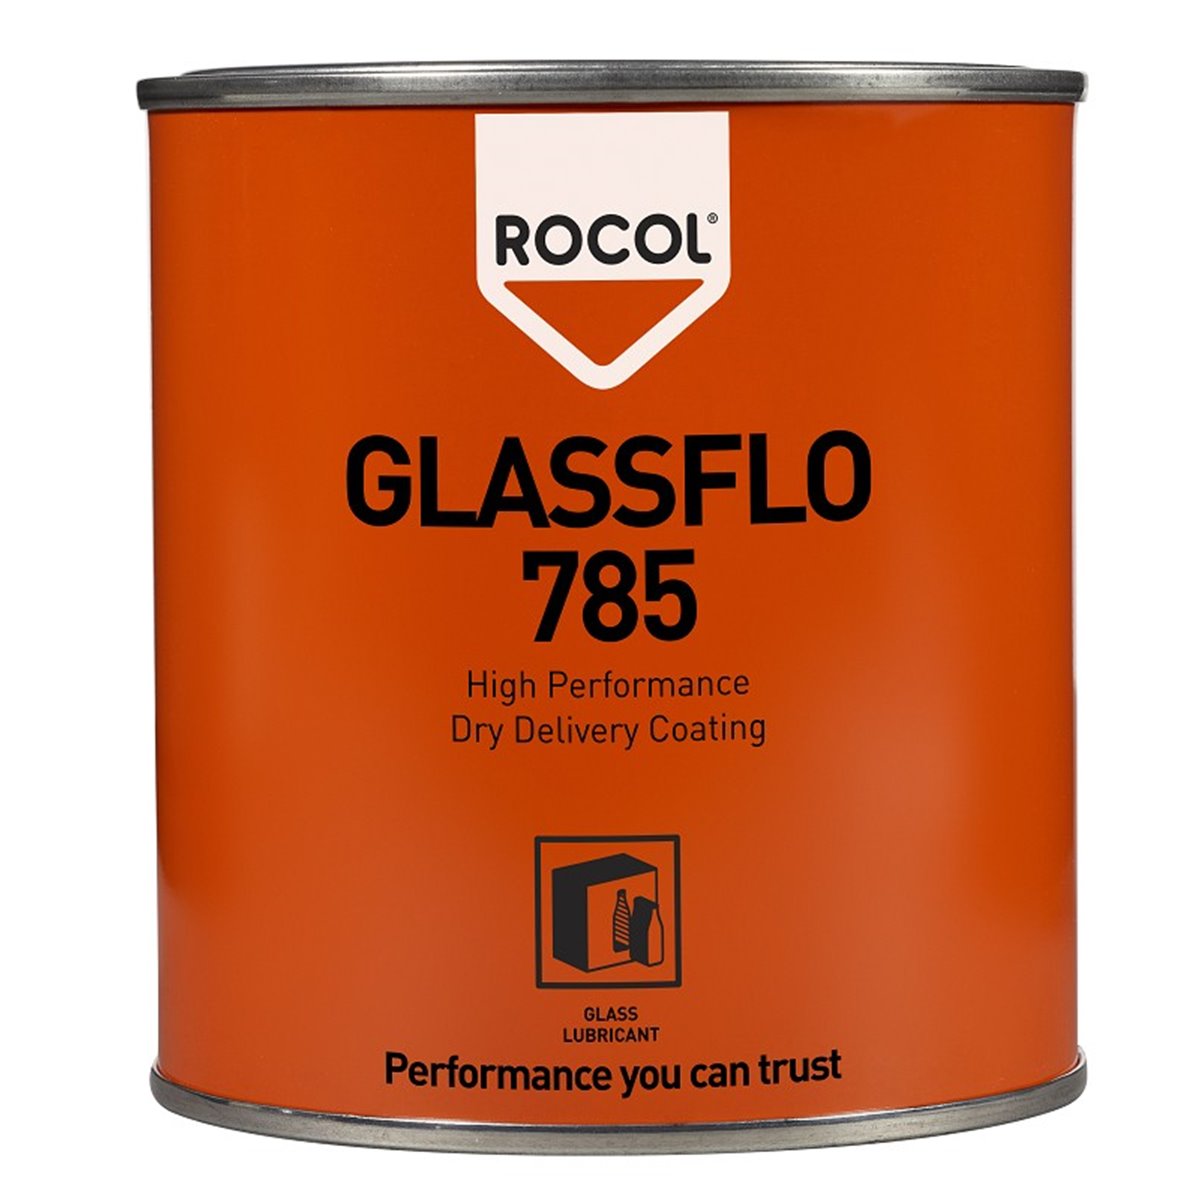 GLASSFLO 785 Rocol 500g RS78844